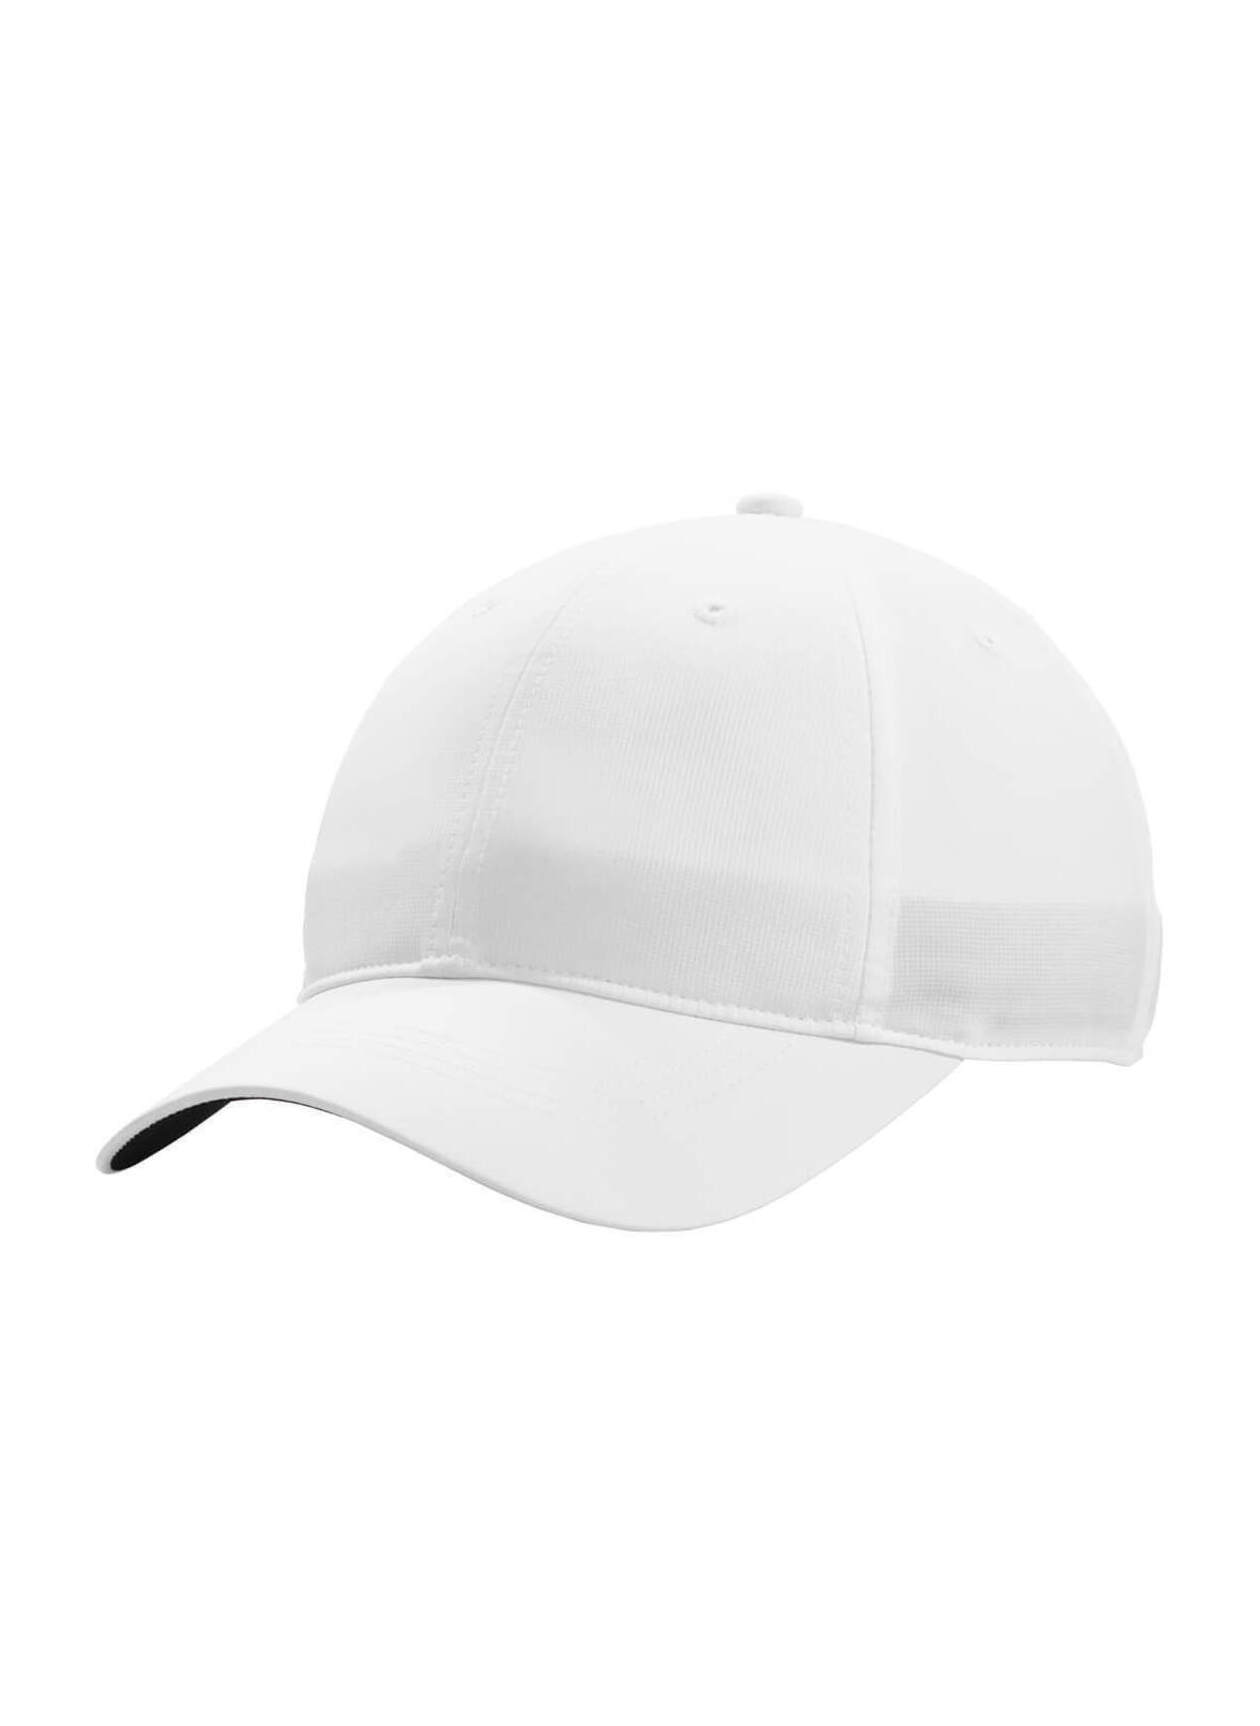 Corporate Nike White / Black Dri-FIT Tech Hat | Custom Company Hats